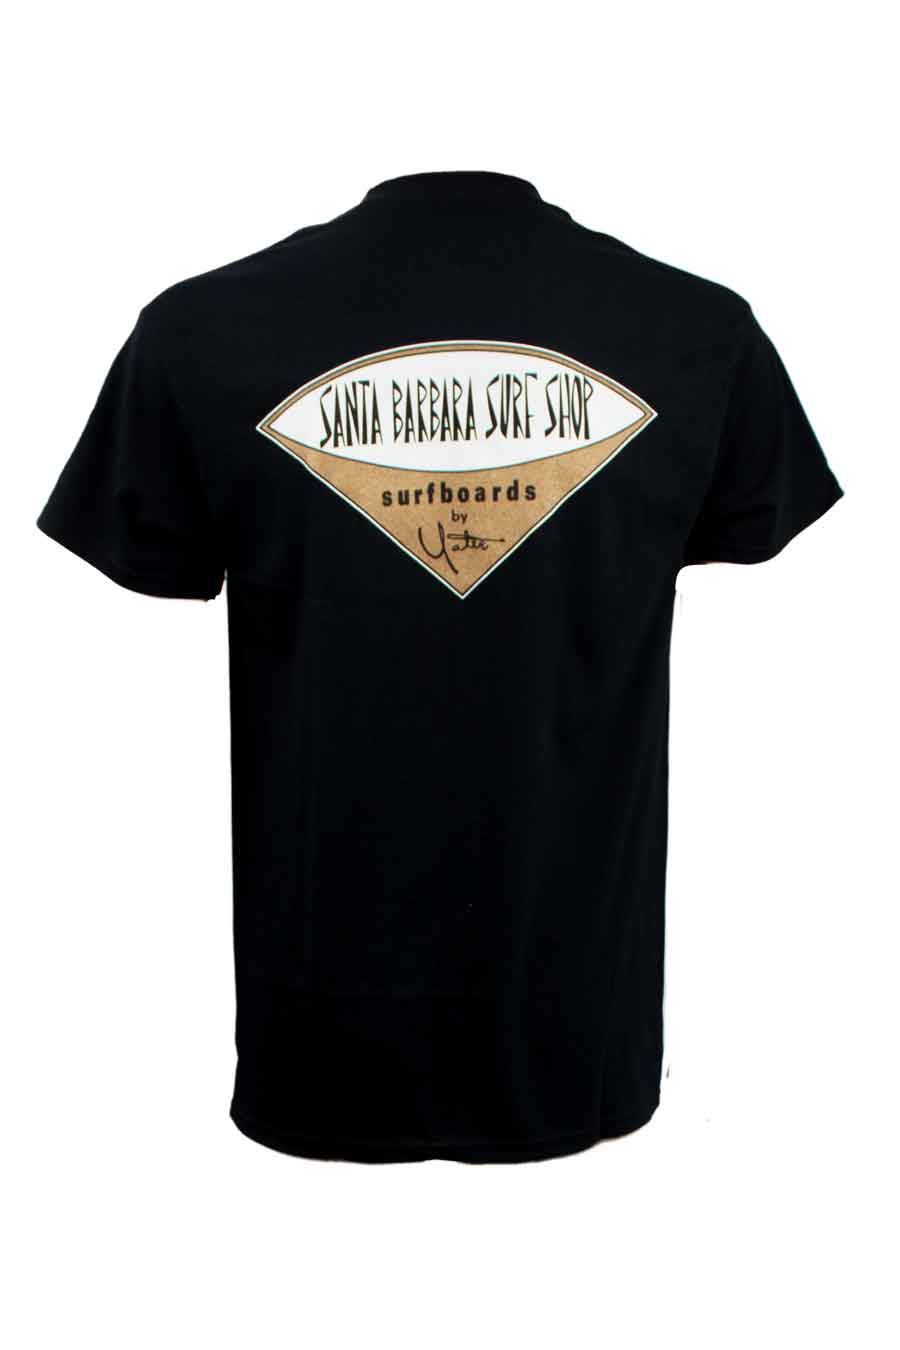 Short Sleeve T-Shirt with Santa Barbara Surf Shop Logo - Surf N' Wear Beach House Online